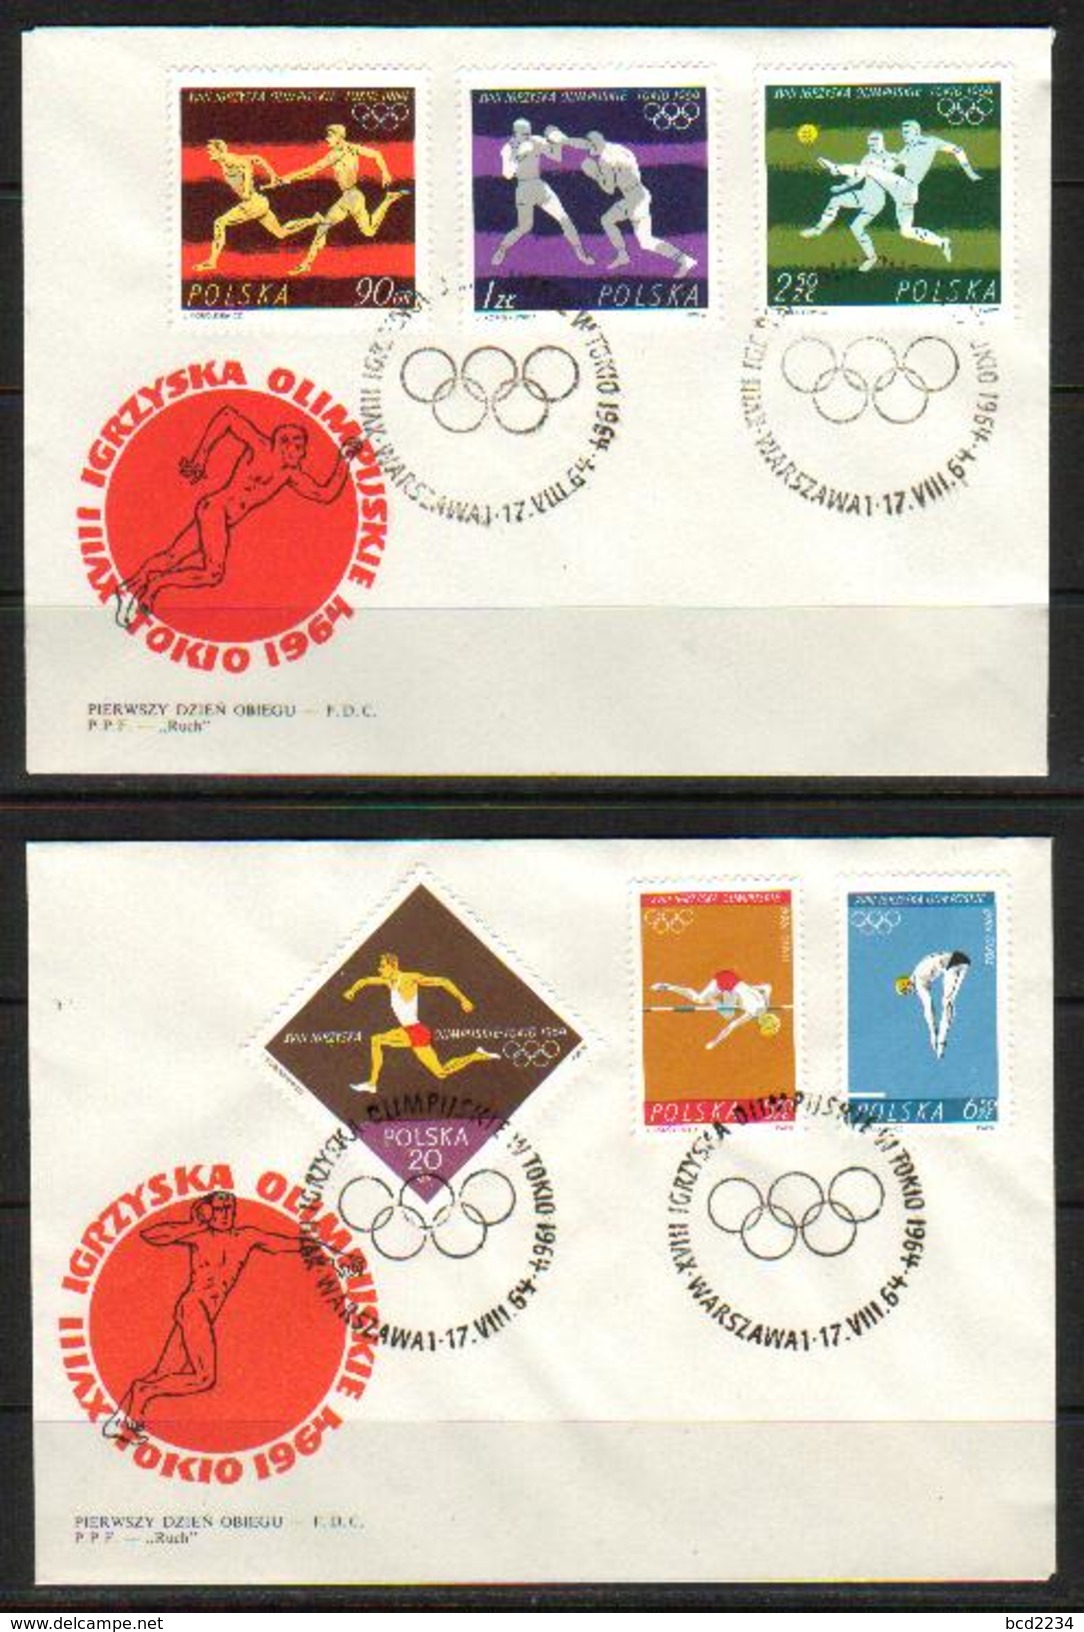 POLAND FDC 1964 TOKYO JAPAN OLYMPICS & MS Weight Lifting Boxing Football High Jump Diving Rowing Running Soccer - Tauchen